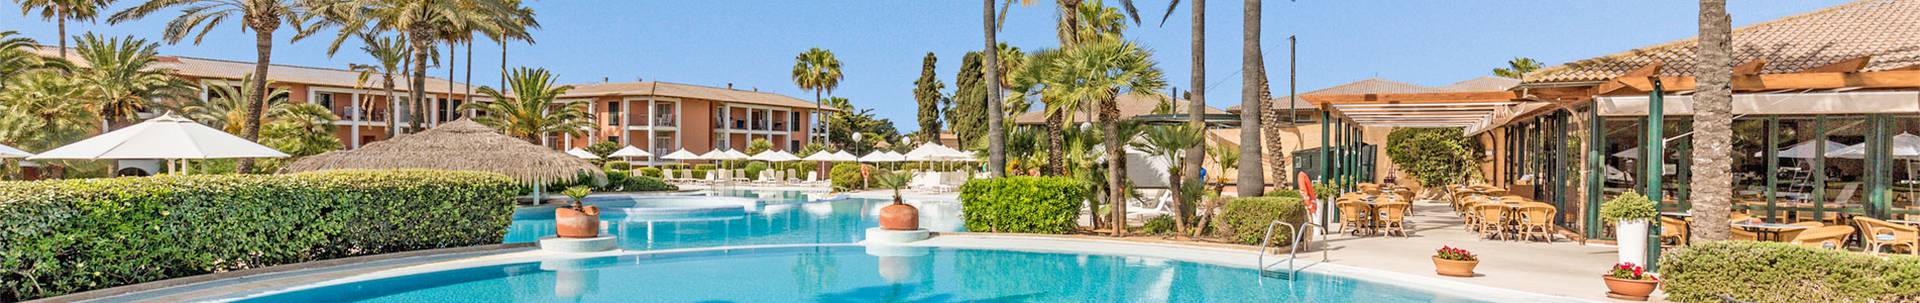 Blau hotels - Majorca - 